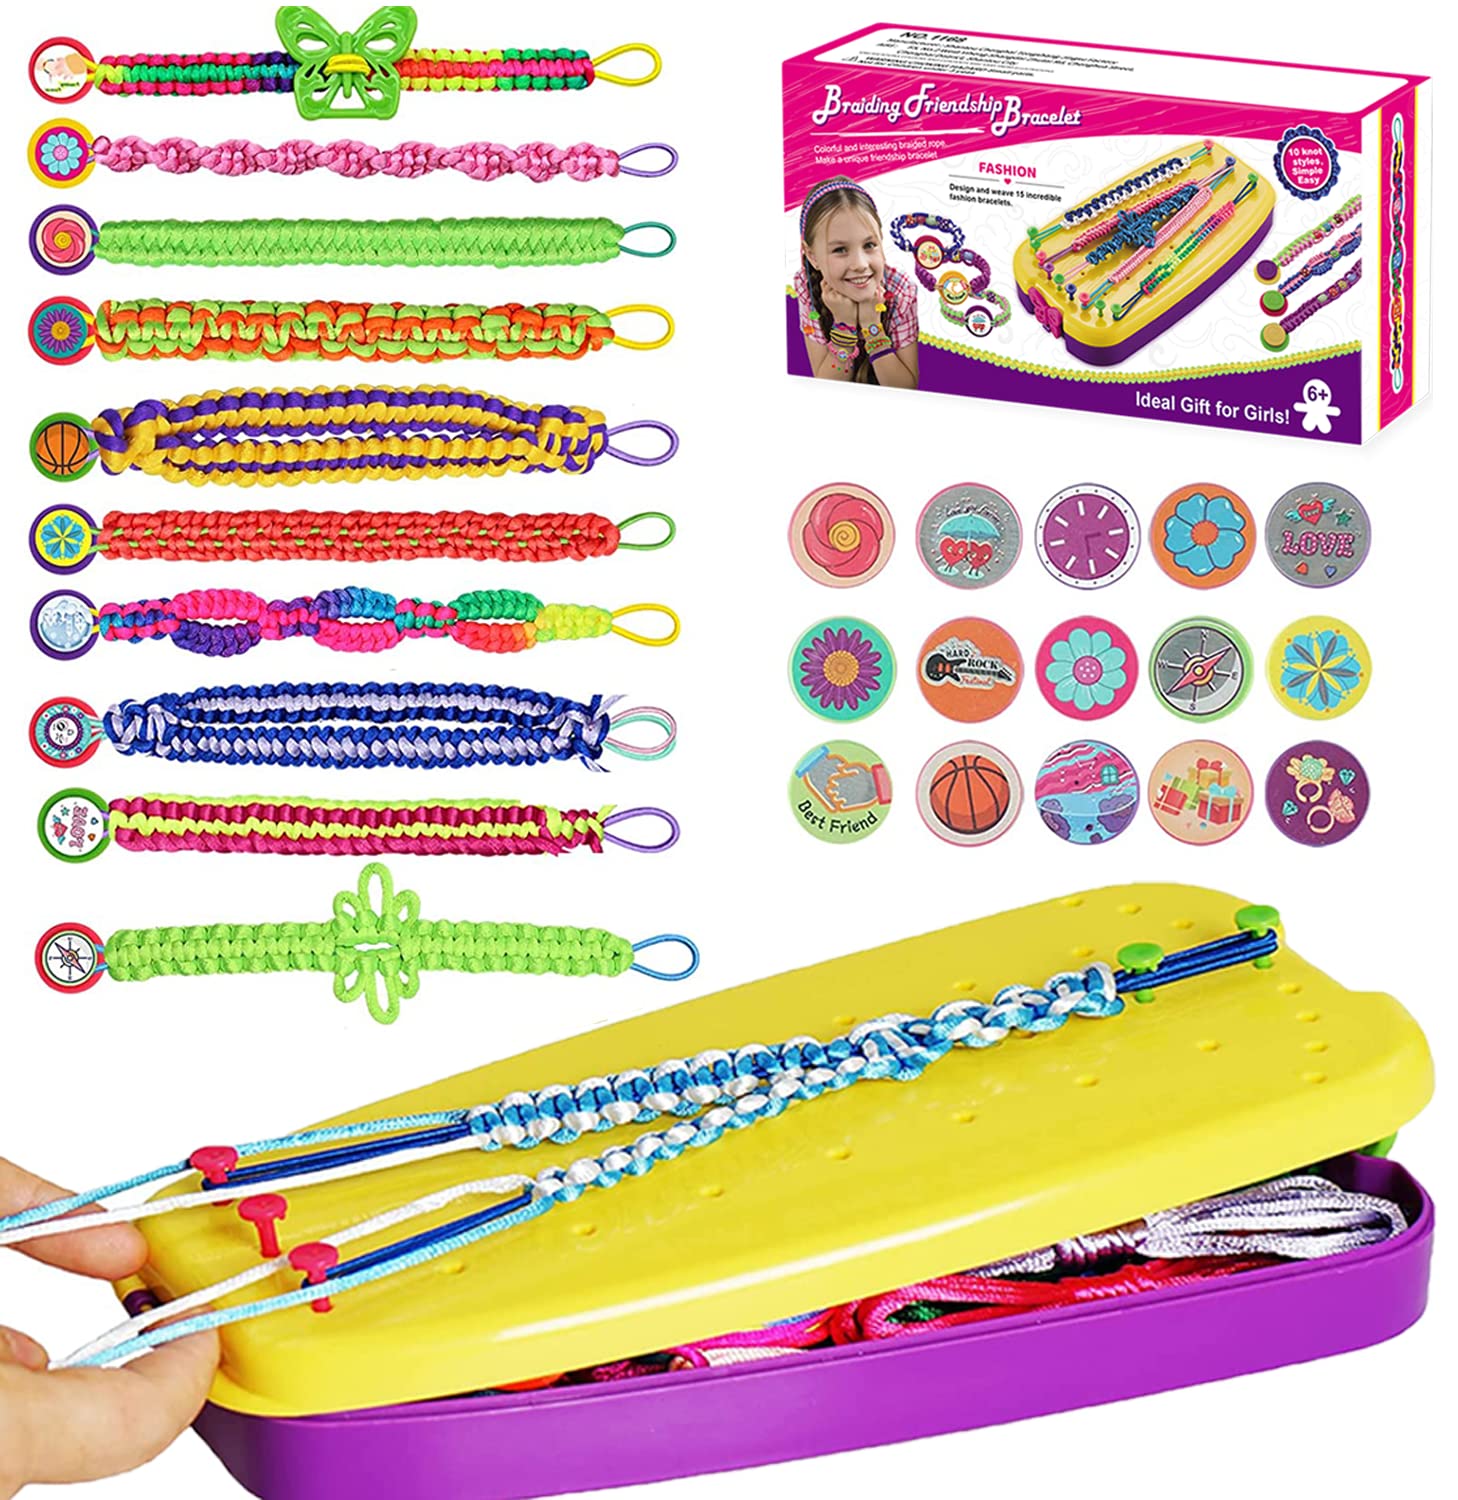 Aizoer Friendship Bracelets Making Kit Toys for Girls, DIY Arts Craft Bracelet Kit for Kids - image 1 of 9